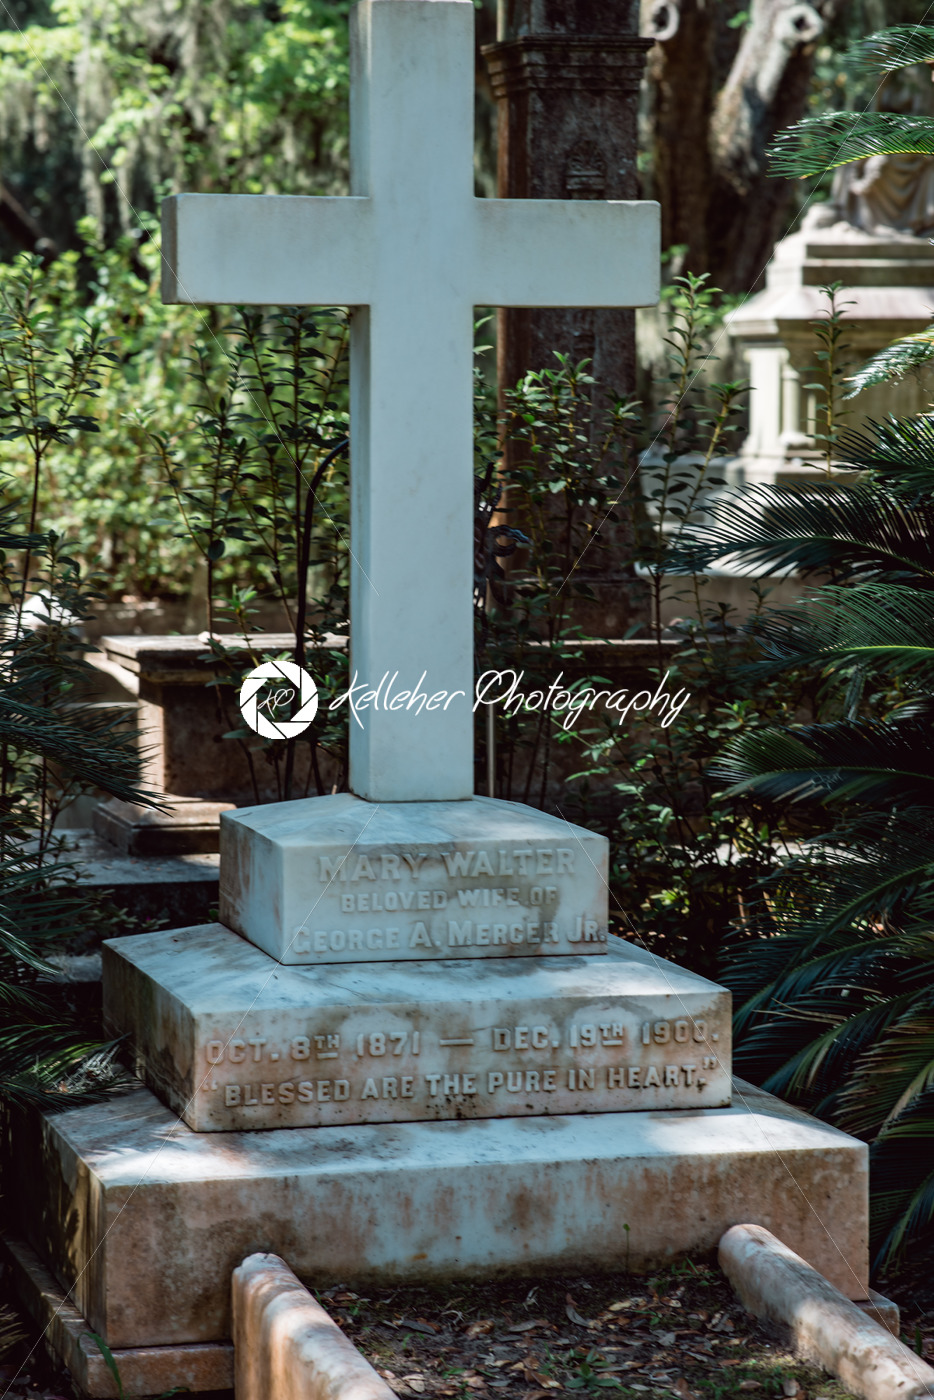 Mary Walter Cemetery Statuary Statue Bonaventure Cemetery Savannah Georgia - Kelleher Photography Store